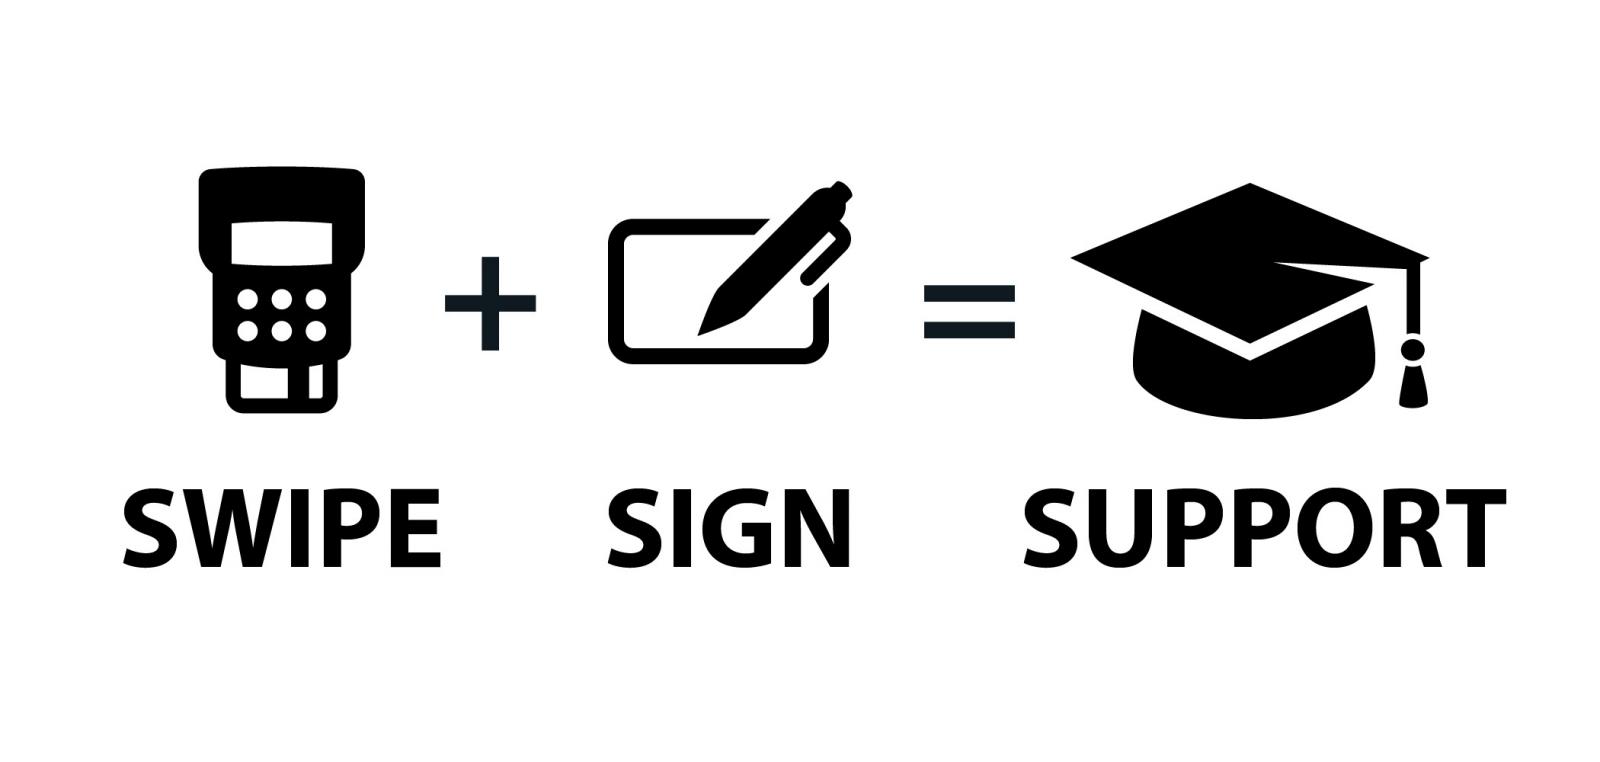 Swipe + Sign = Support